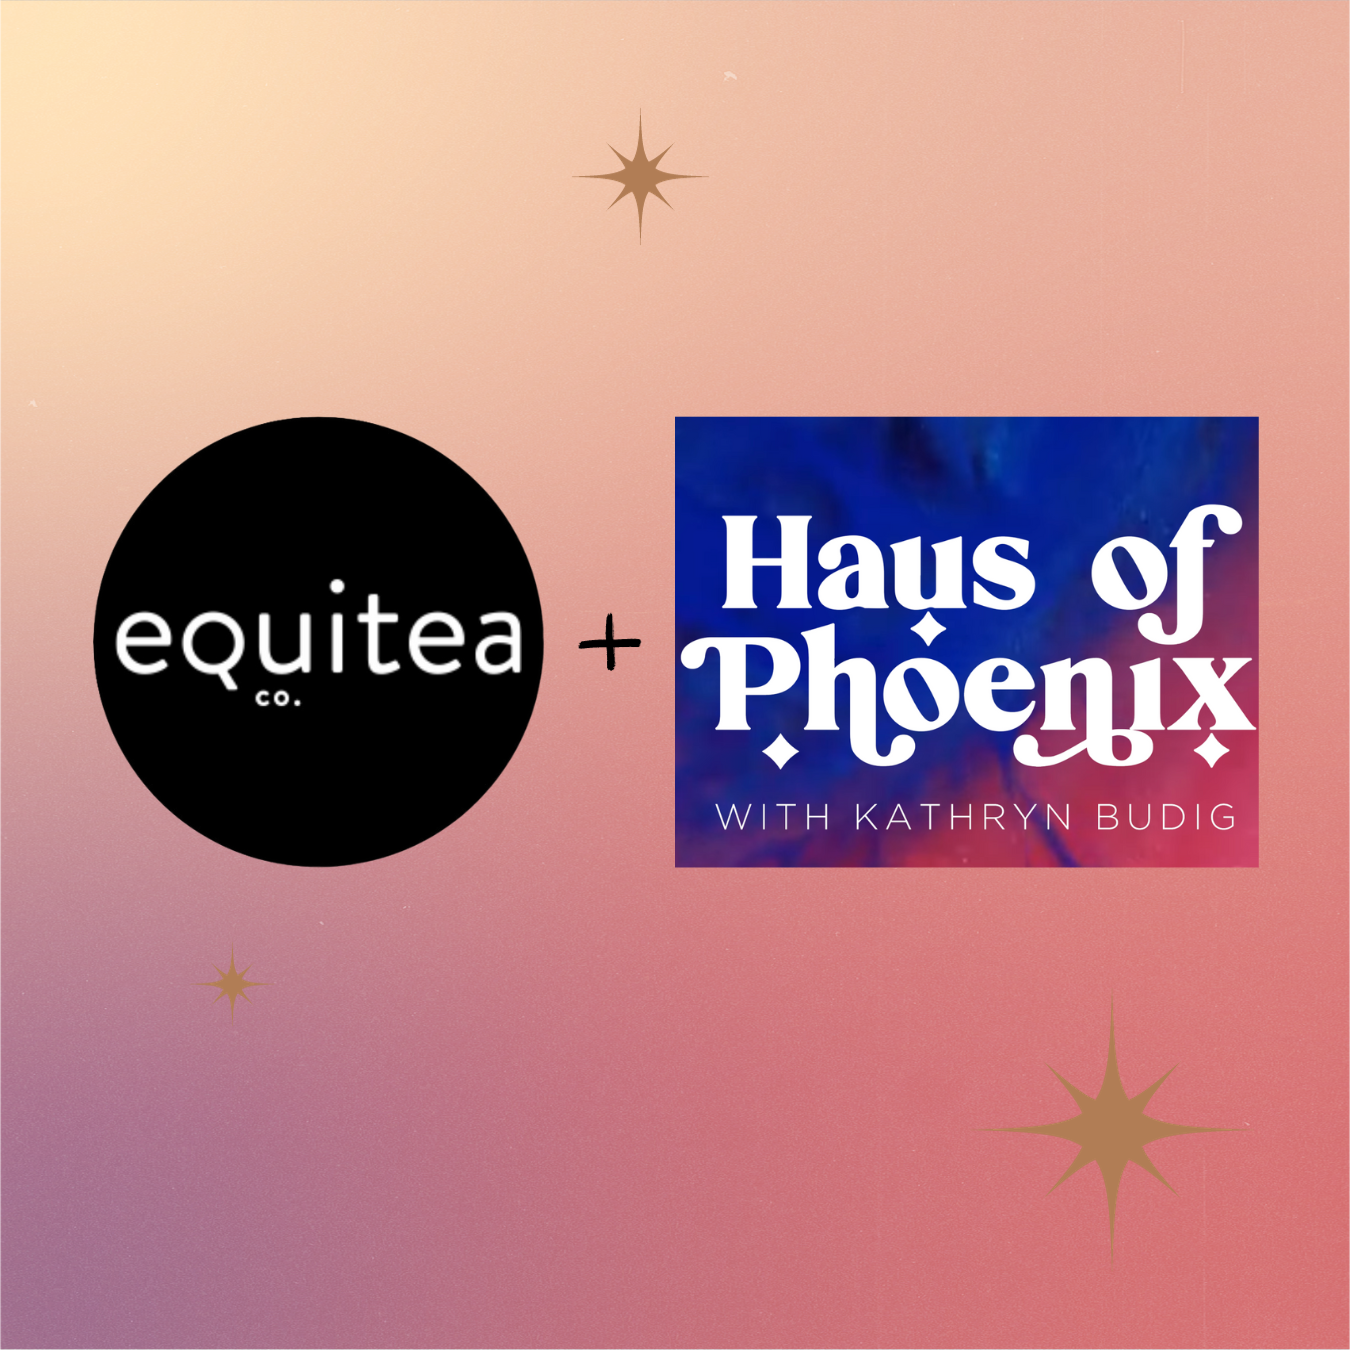 Equitea + Haus of Phoenix Yoga Subscription